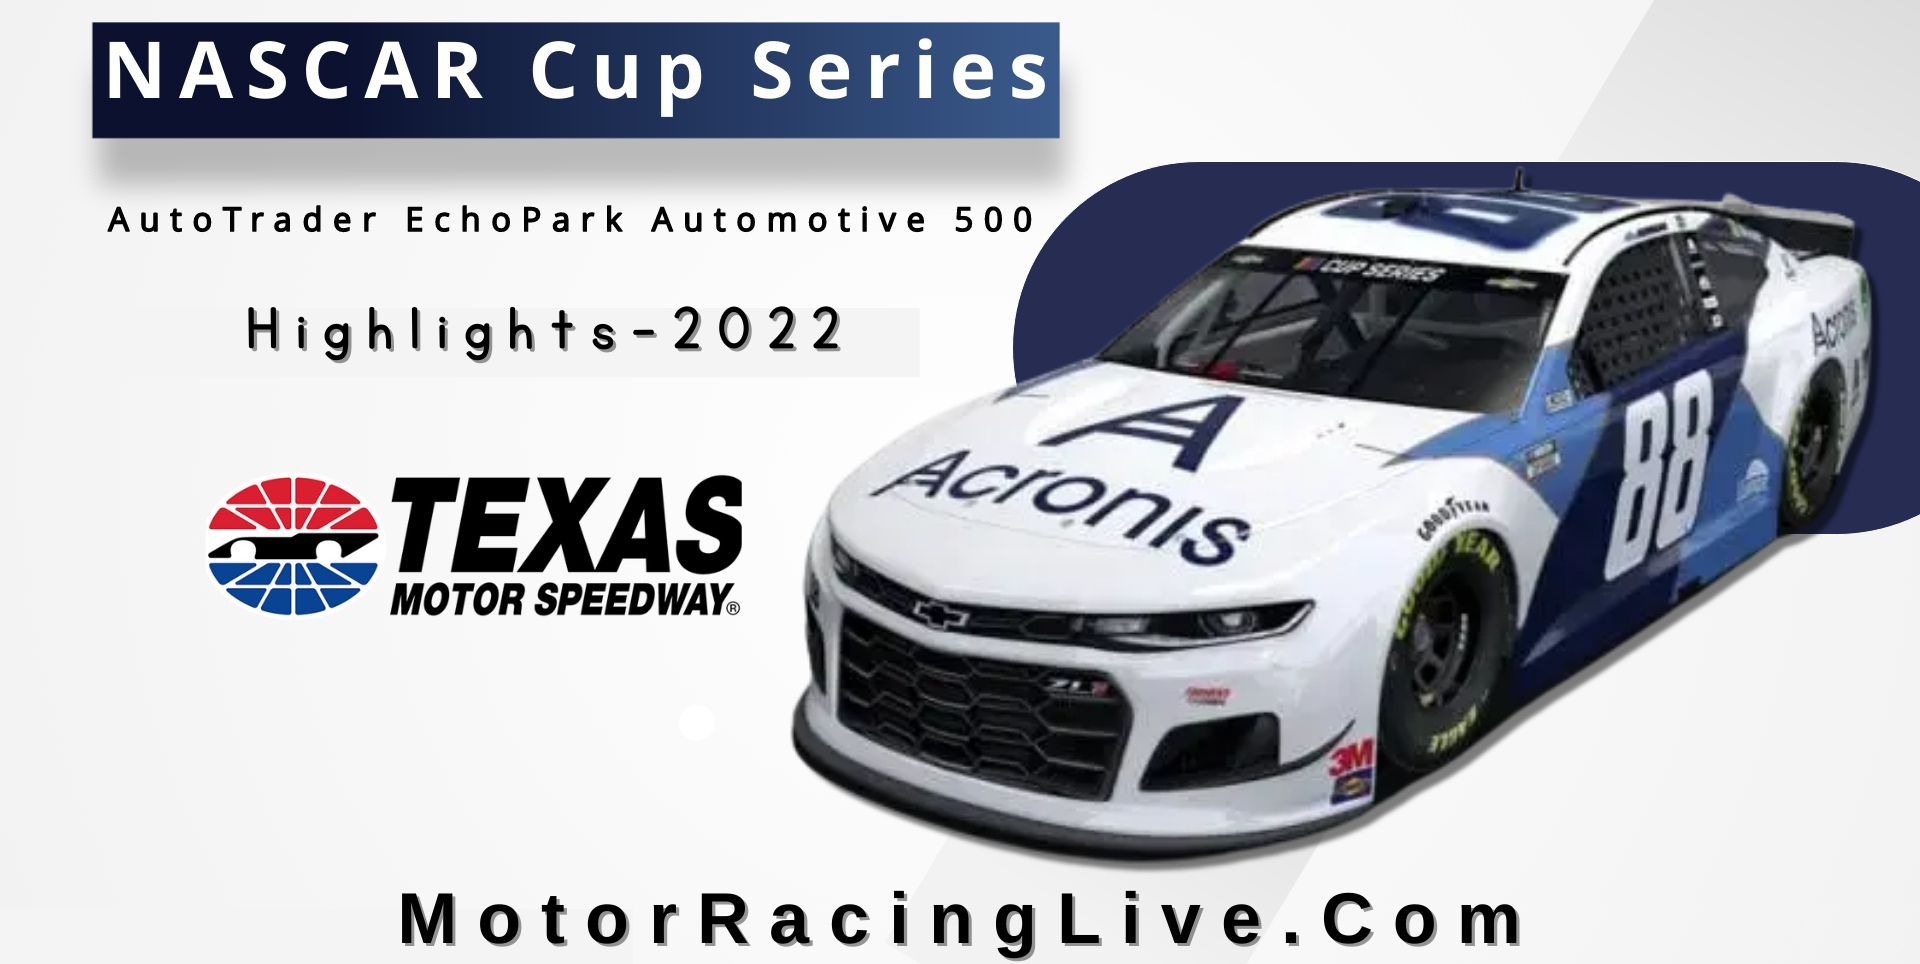 AutoTrader EchoPark Automotive 500 Highlights 2022 NASCAR Cup